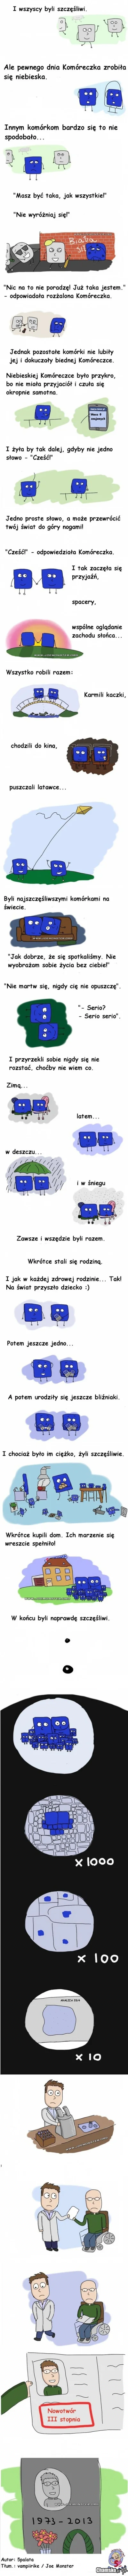 Garztam - #humorobrazkowy #medycyna #depresja